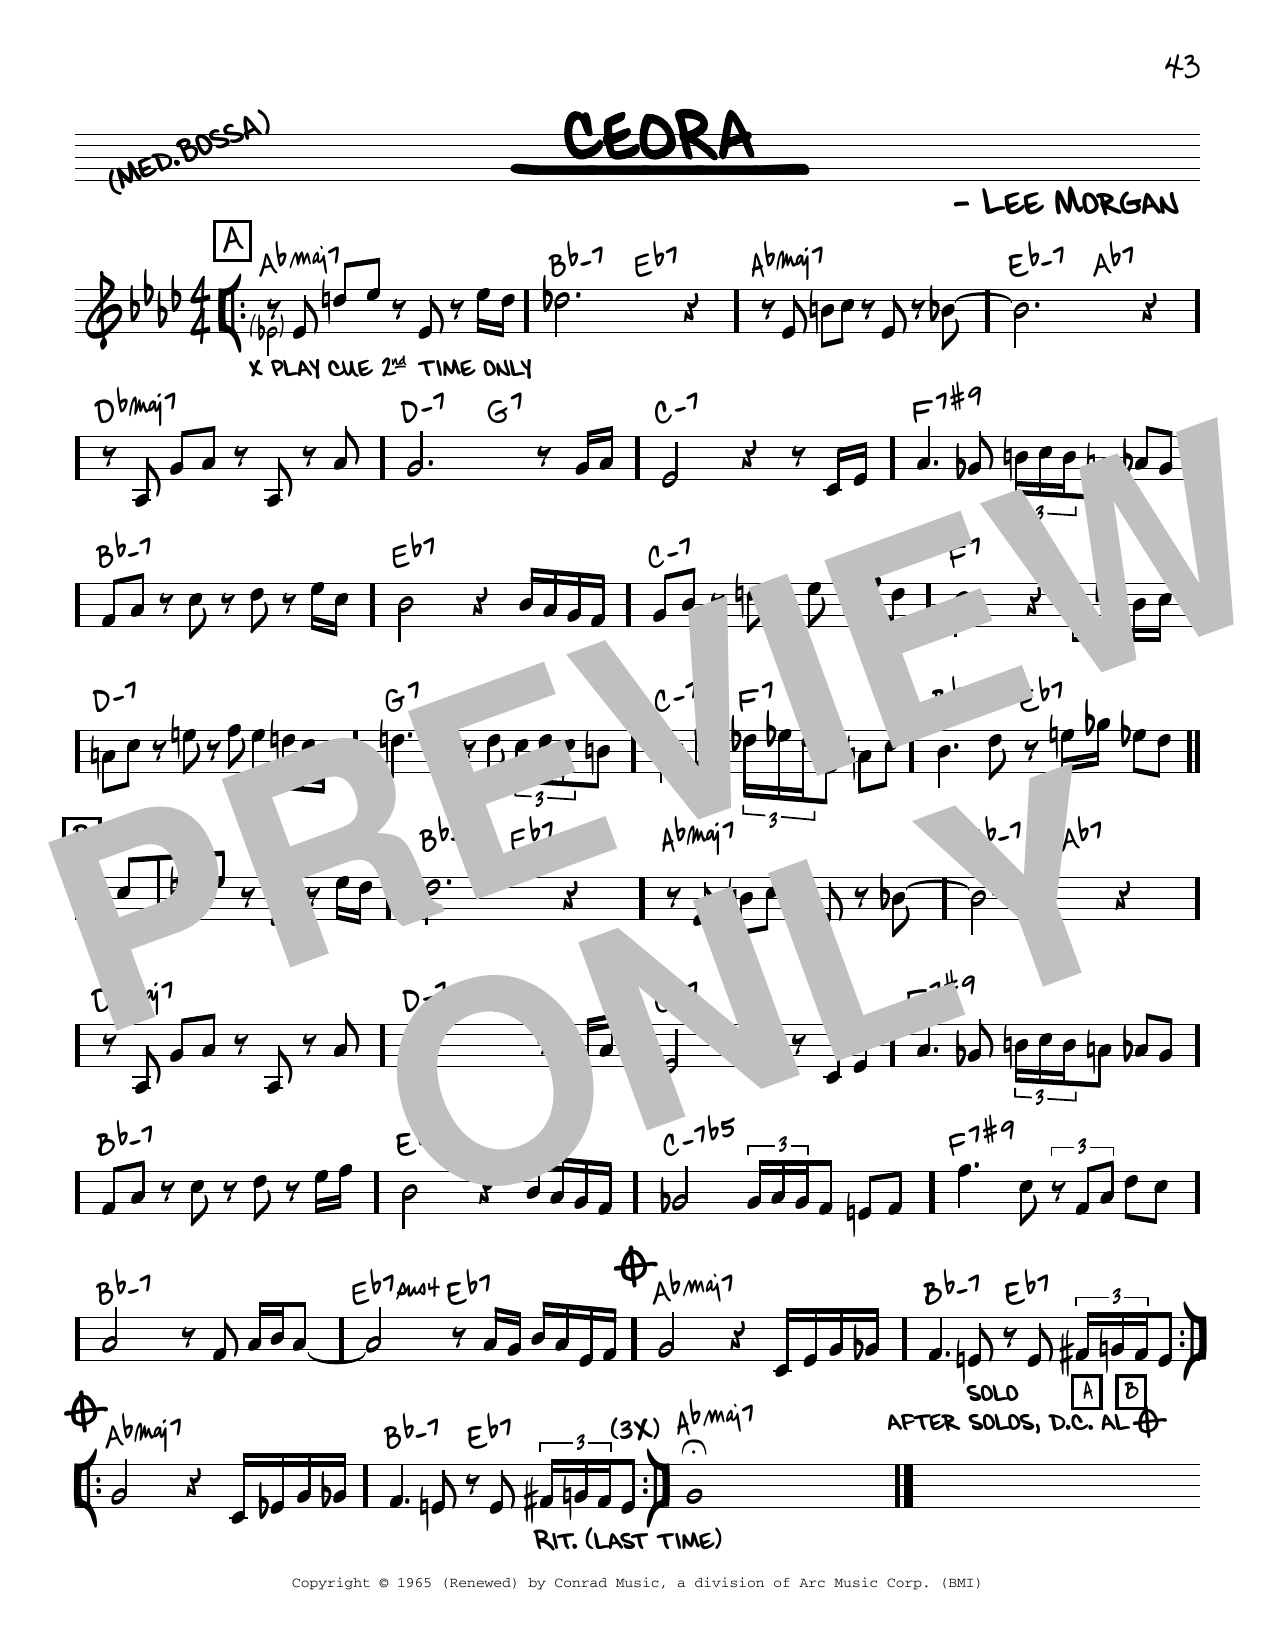 Lee Morgan Ceora Sheet Music Notes & Chords for Real Book - Melody & Chords - Bb Instruments - Download or Print PDF